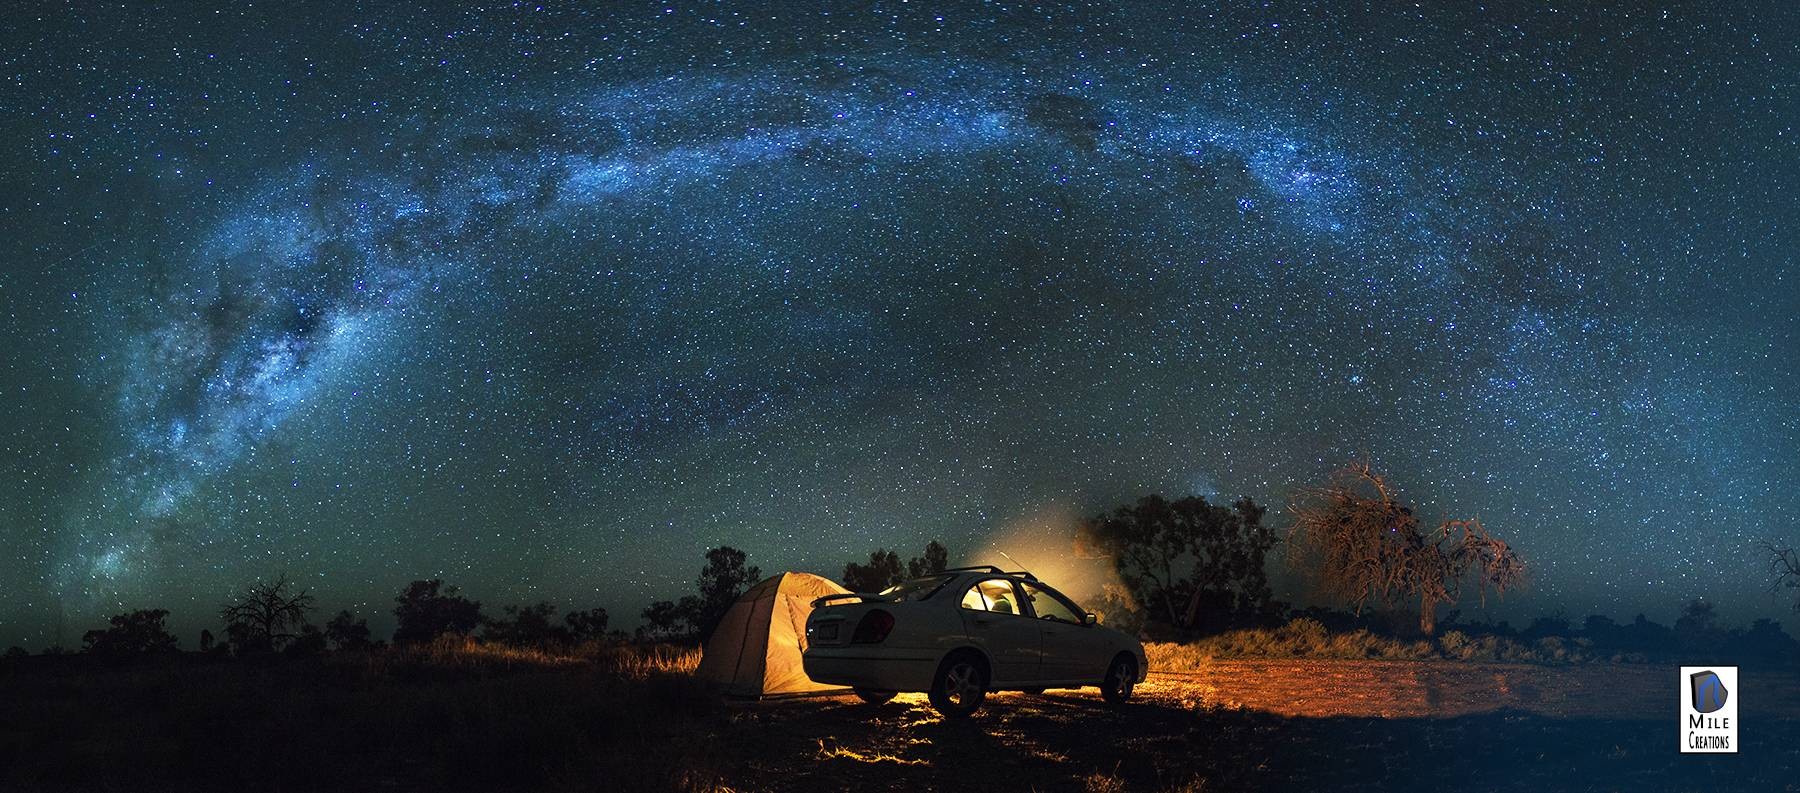 General 1800x793 stars landscape sky car outdoors night